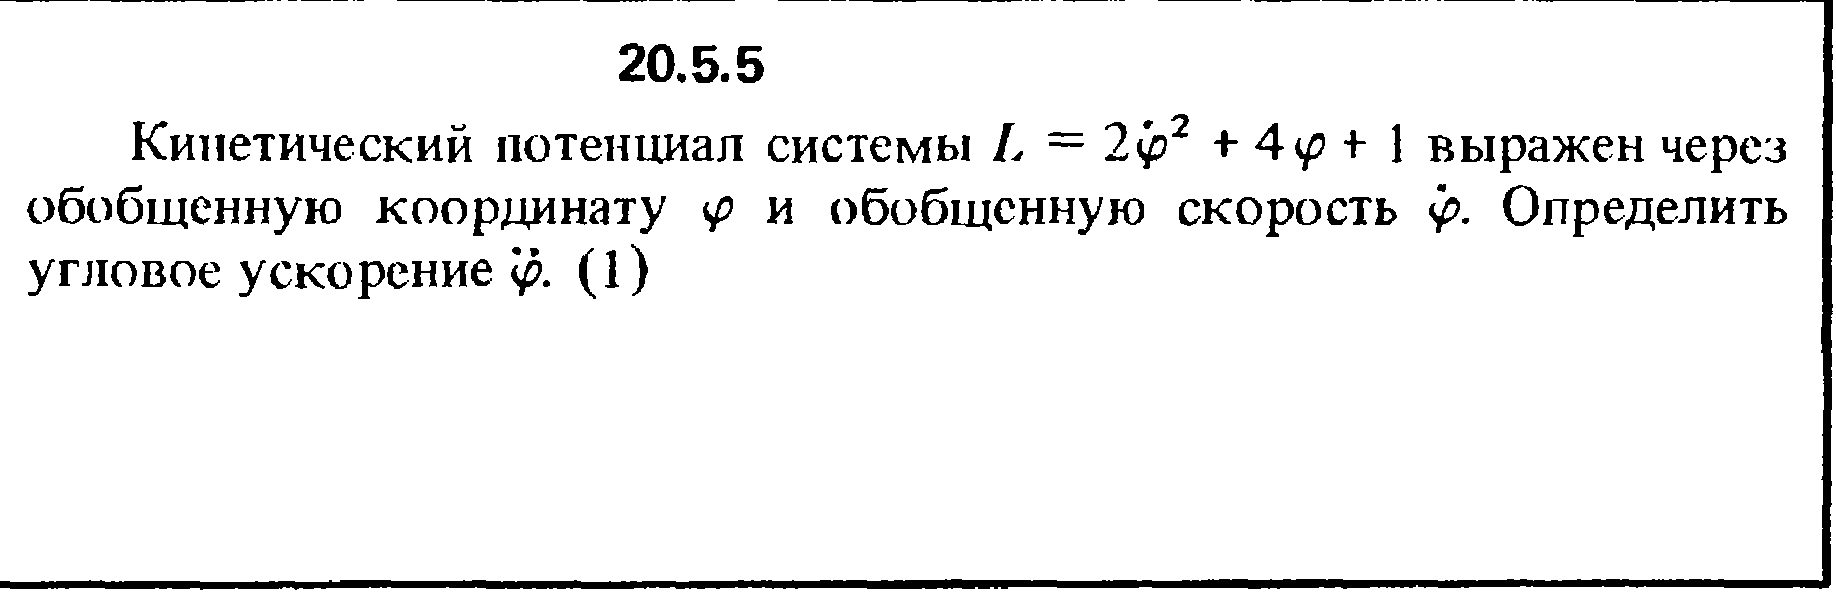 Решение 20.5.5 из сборника (решебника) Кепе О.Е. 1989